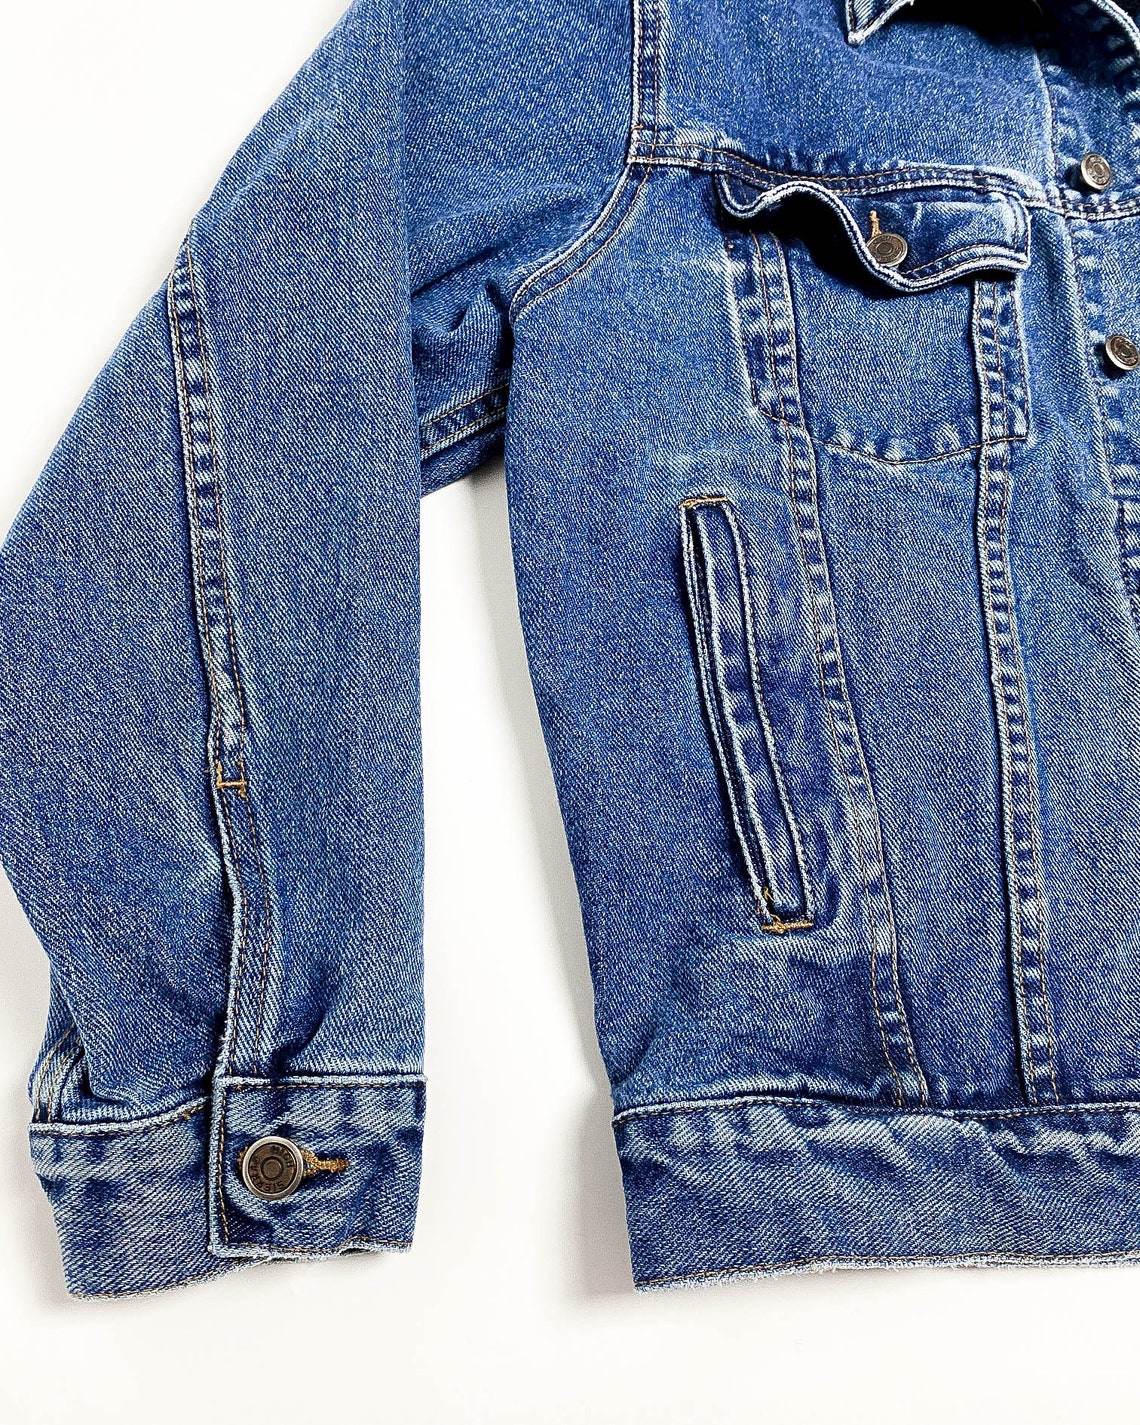 Vintage Denim Jacket High Sierra Jean Jacket | Etsy